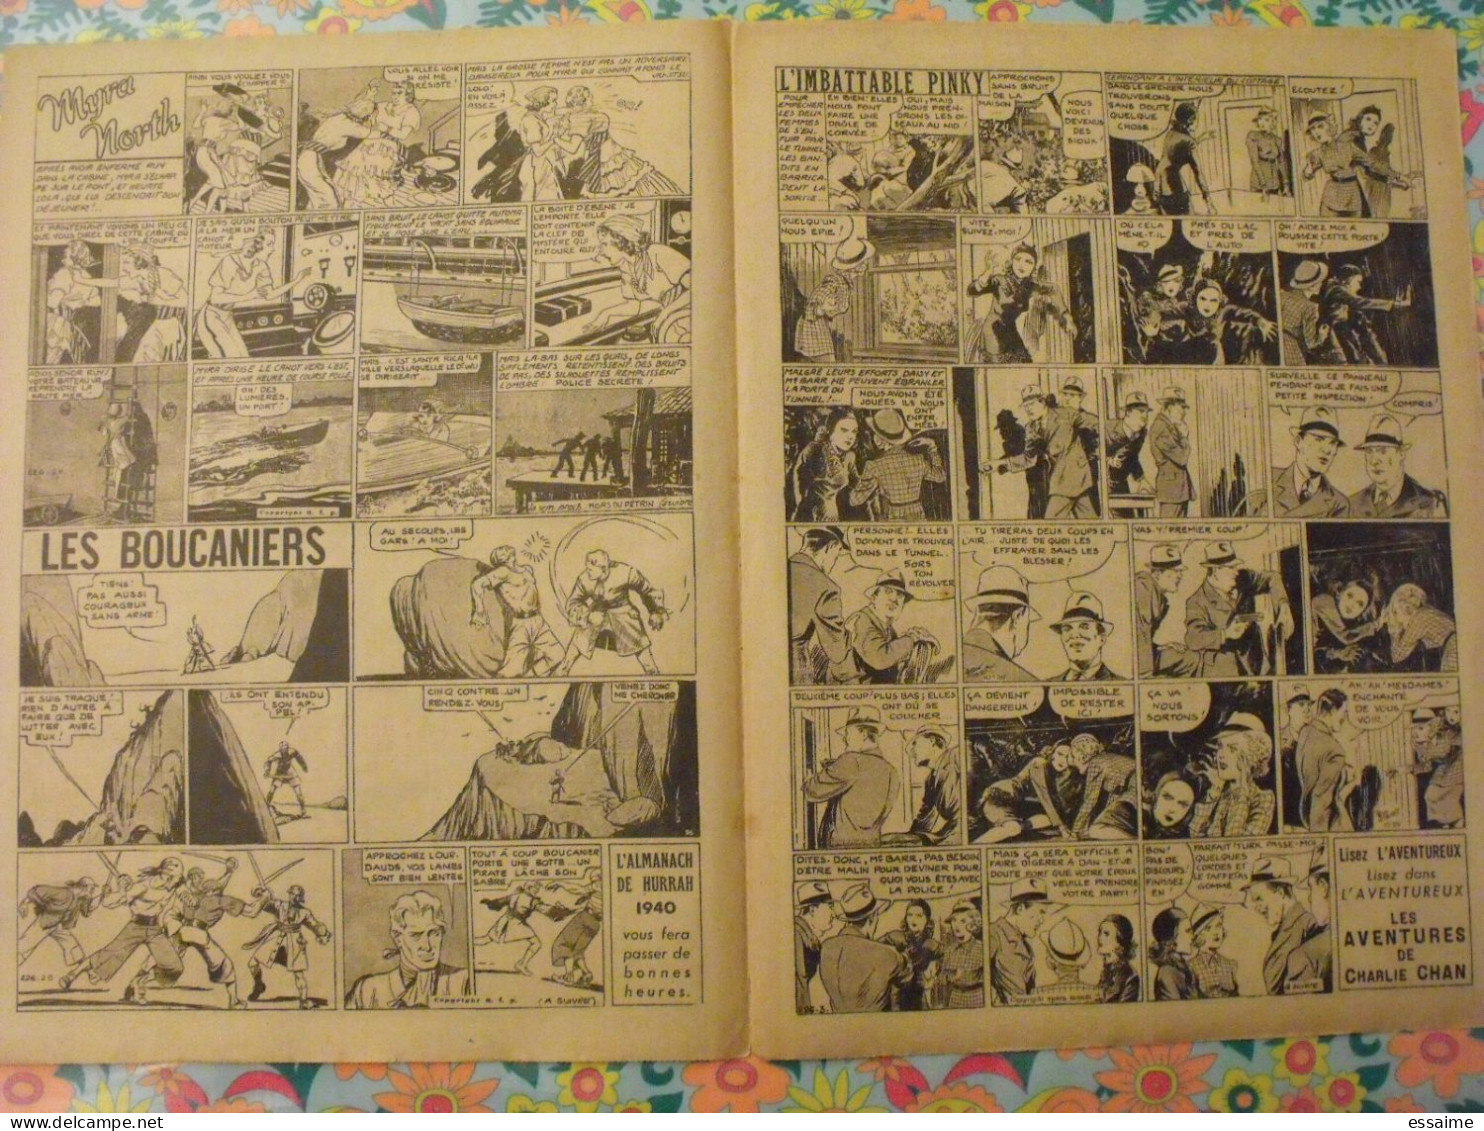 5 n° de Hurrah ! de 1939. Brick Bradford, Tarzan, le roi de la police montée, gordon. A redécouvrir